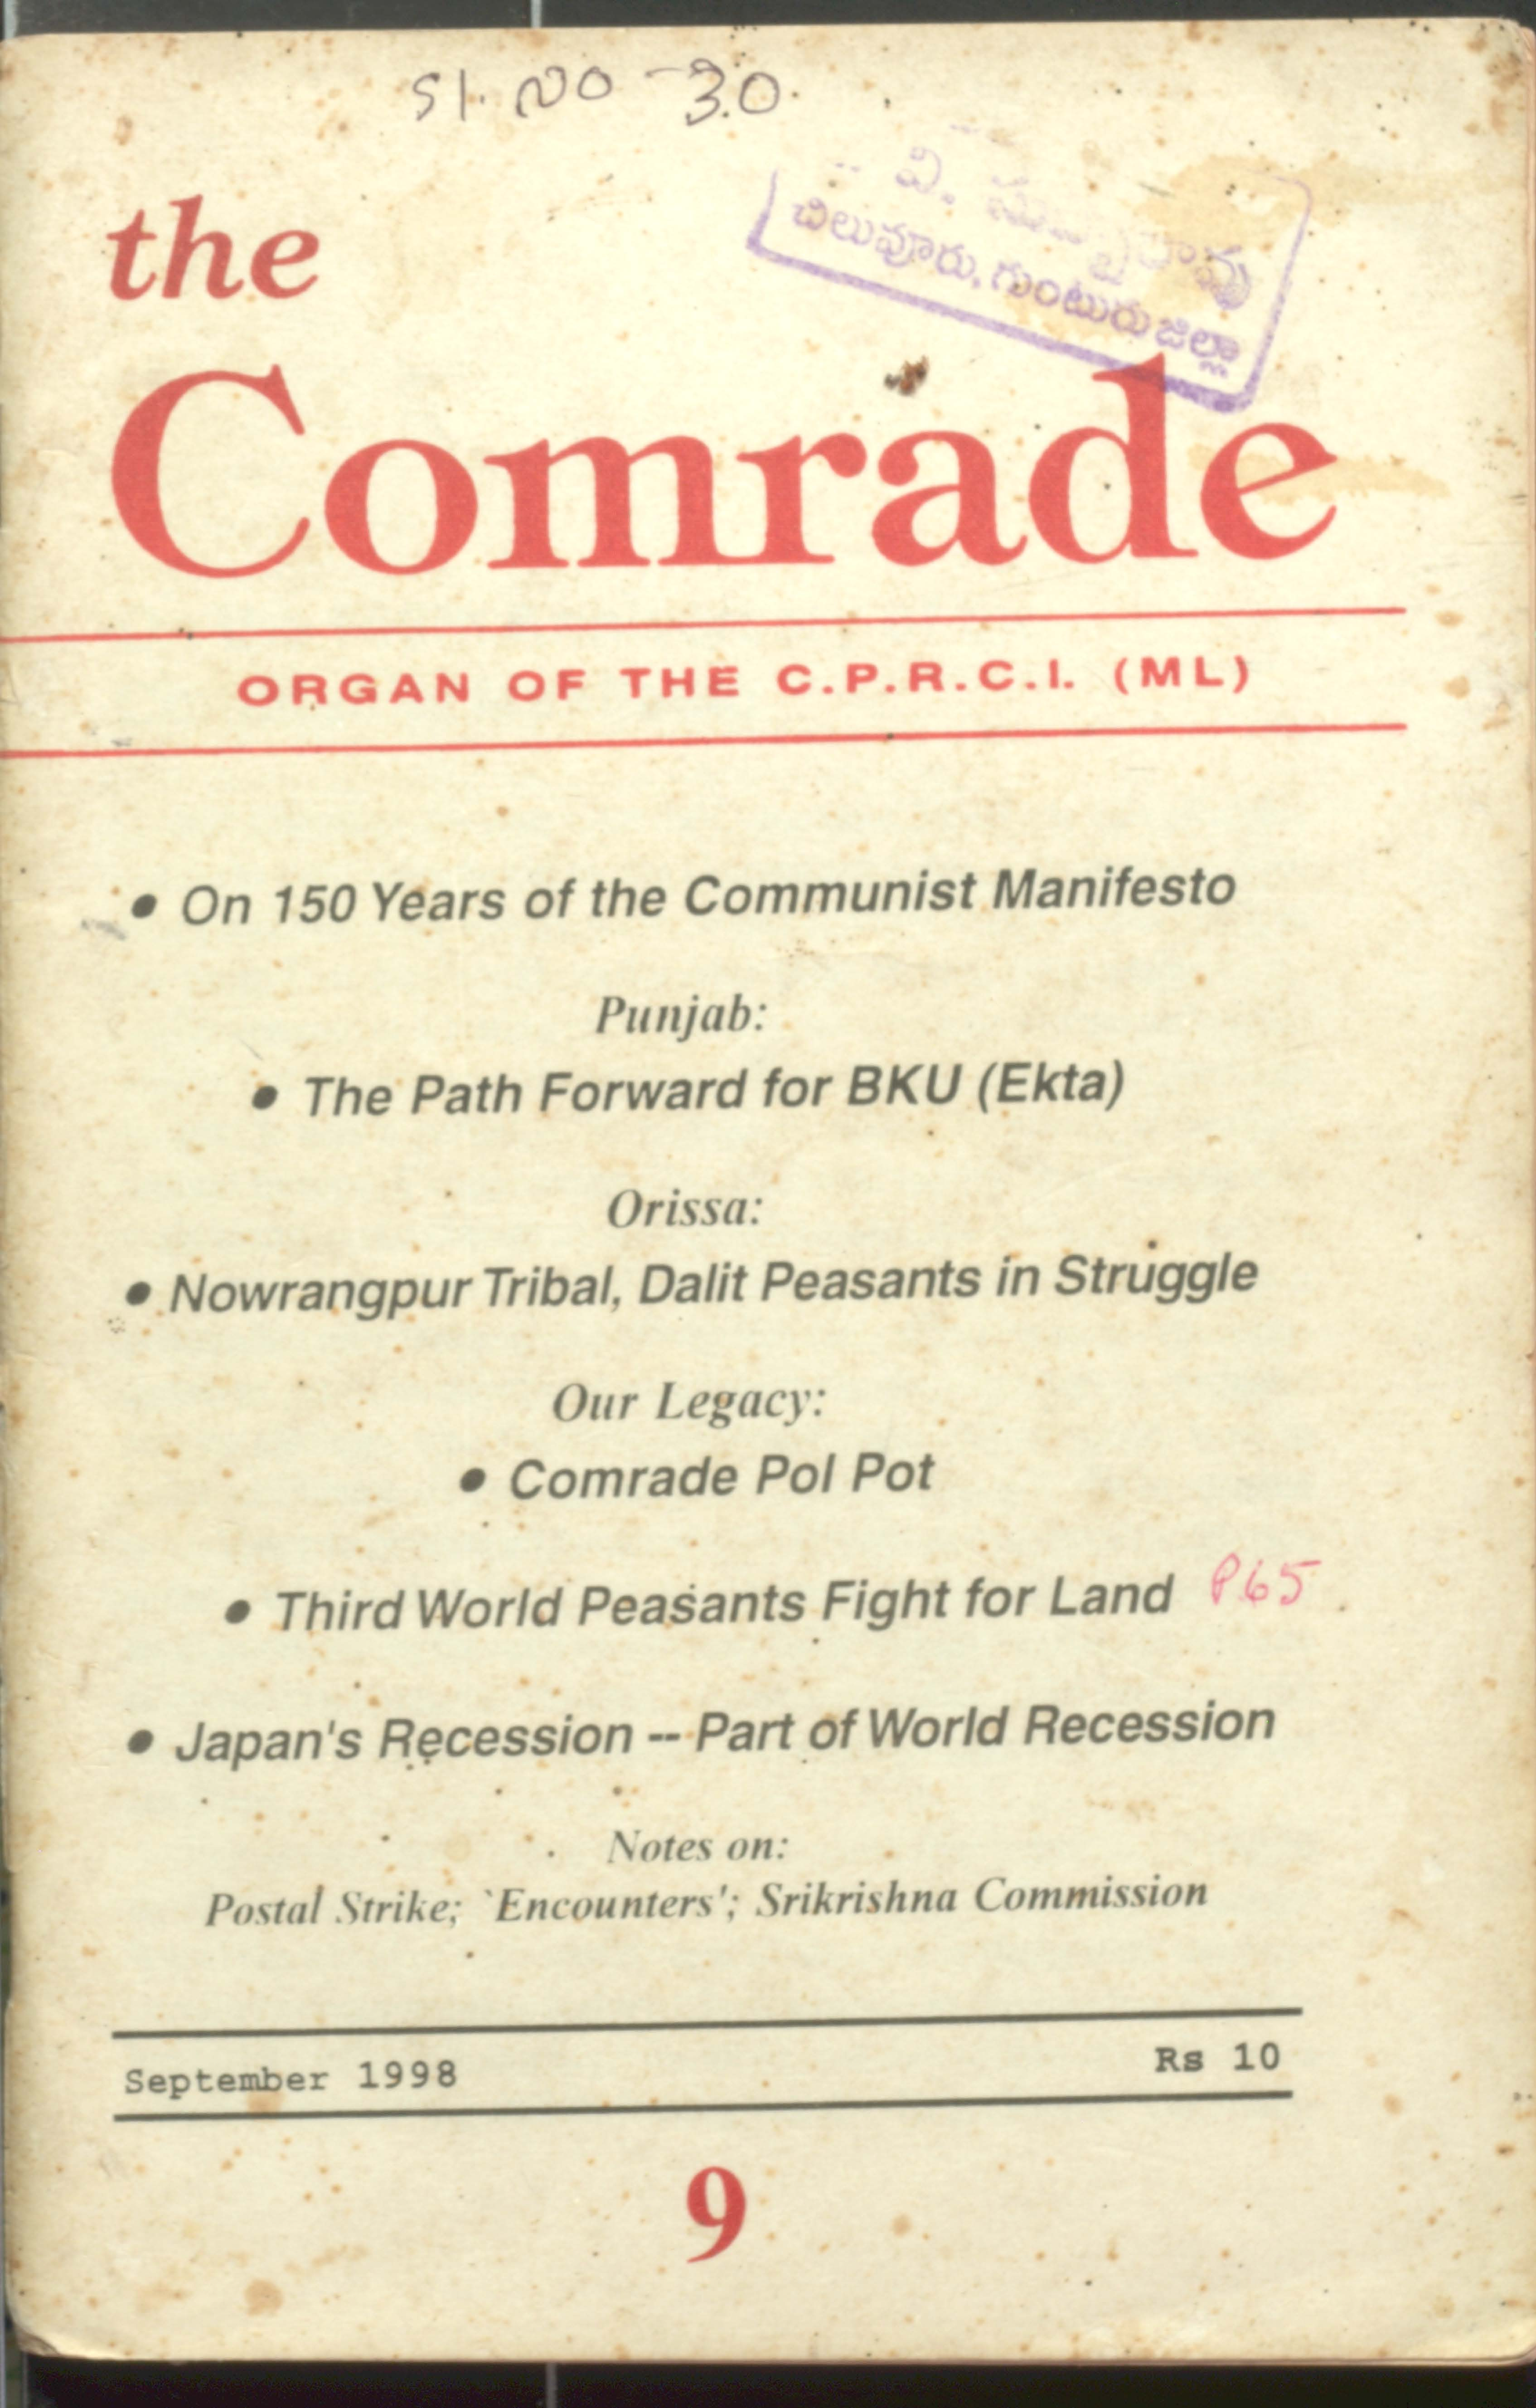 The comrade organ of the c.p.r.c.l.(ml)